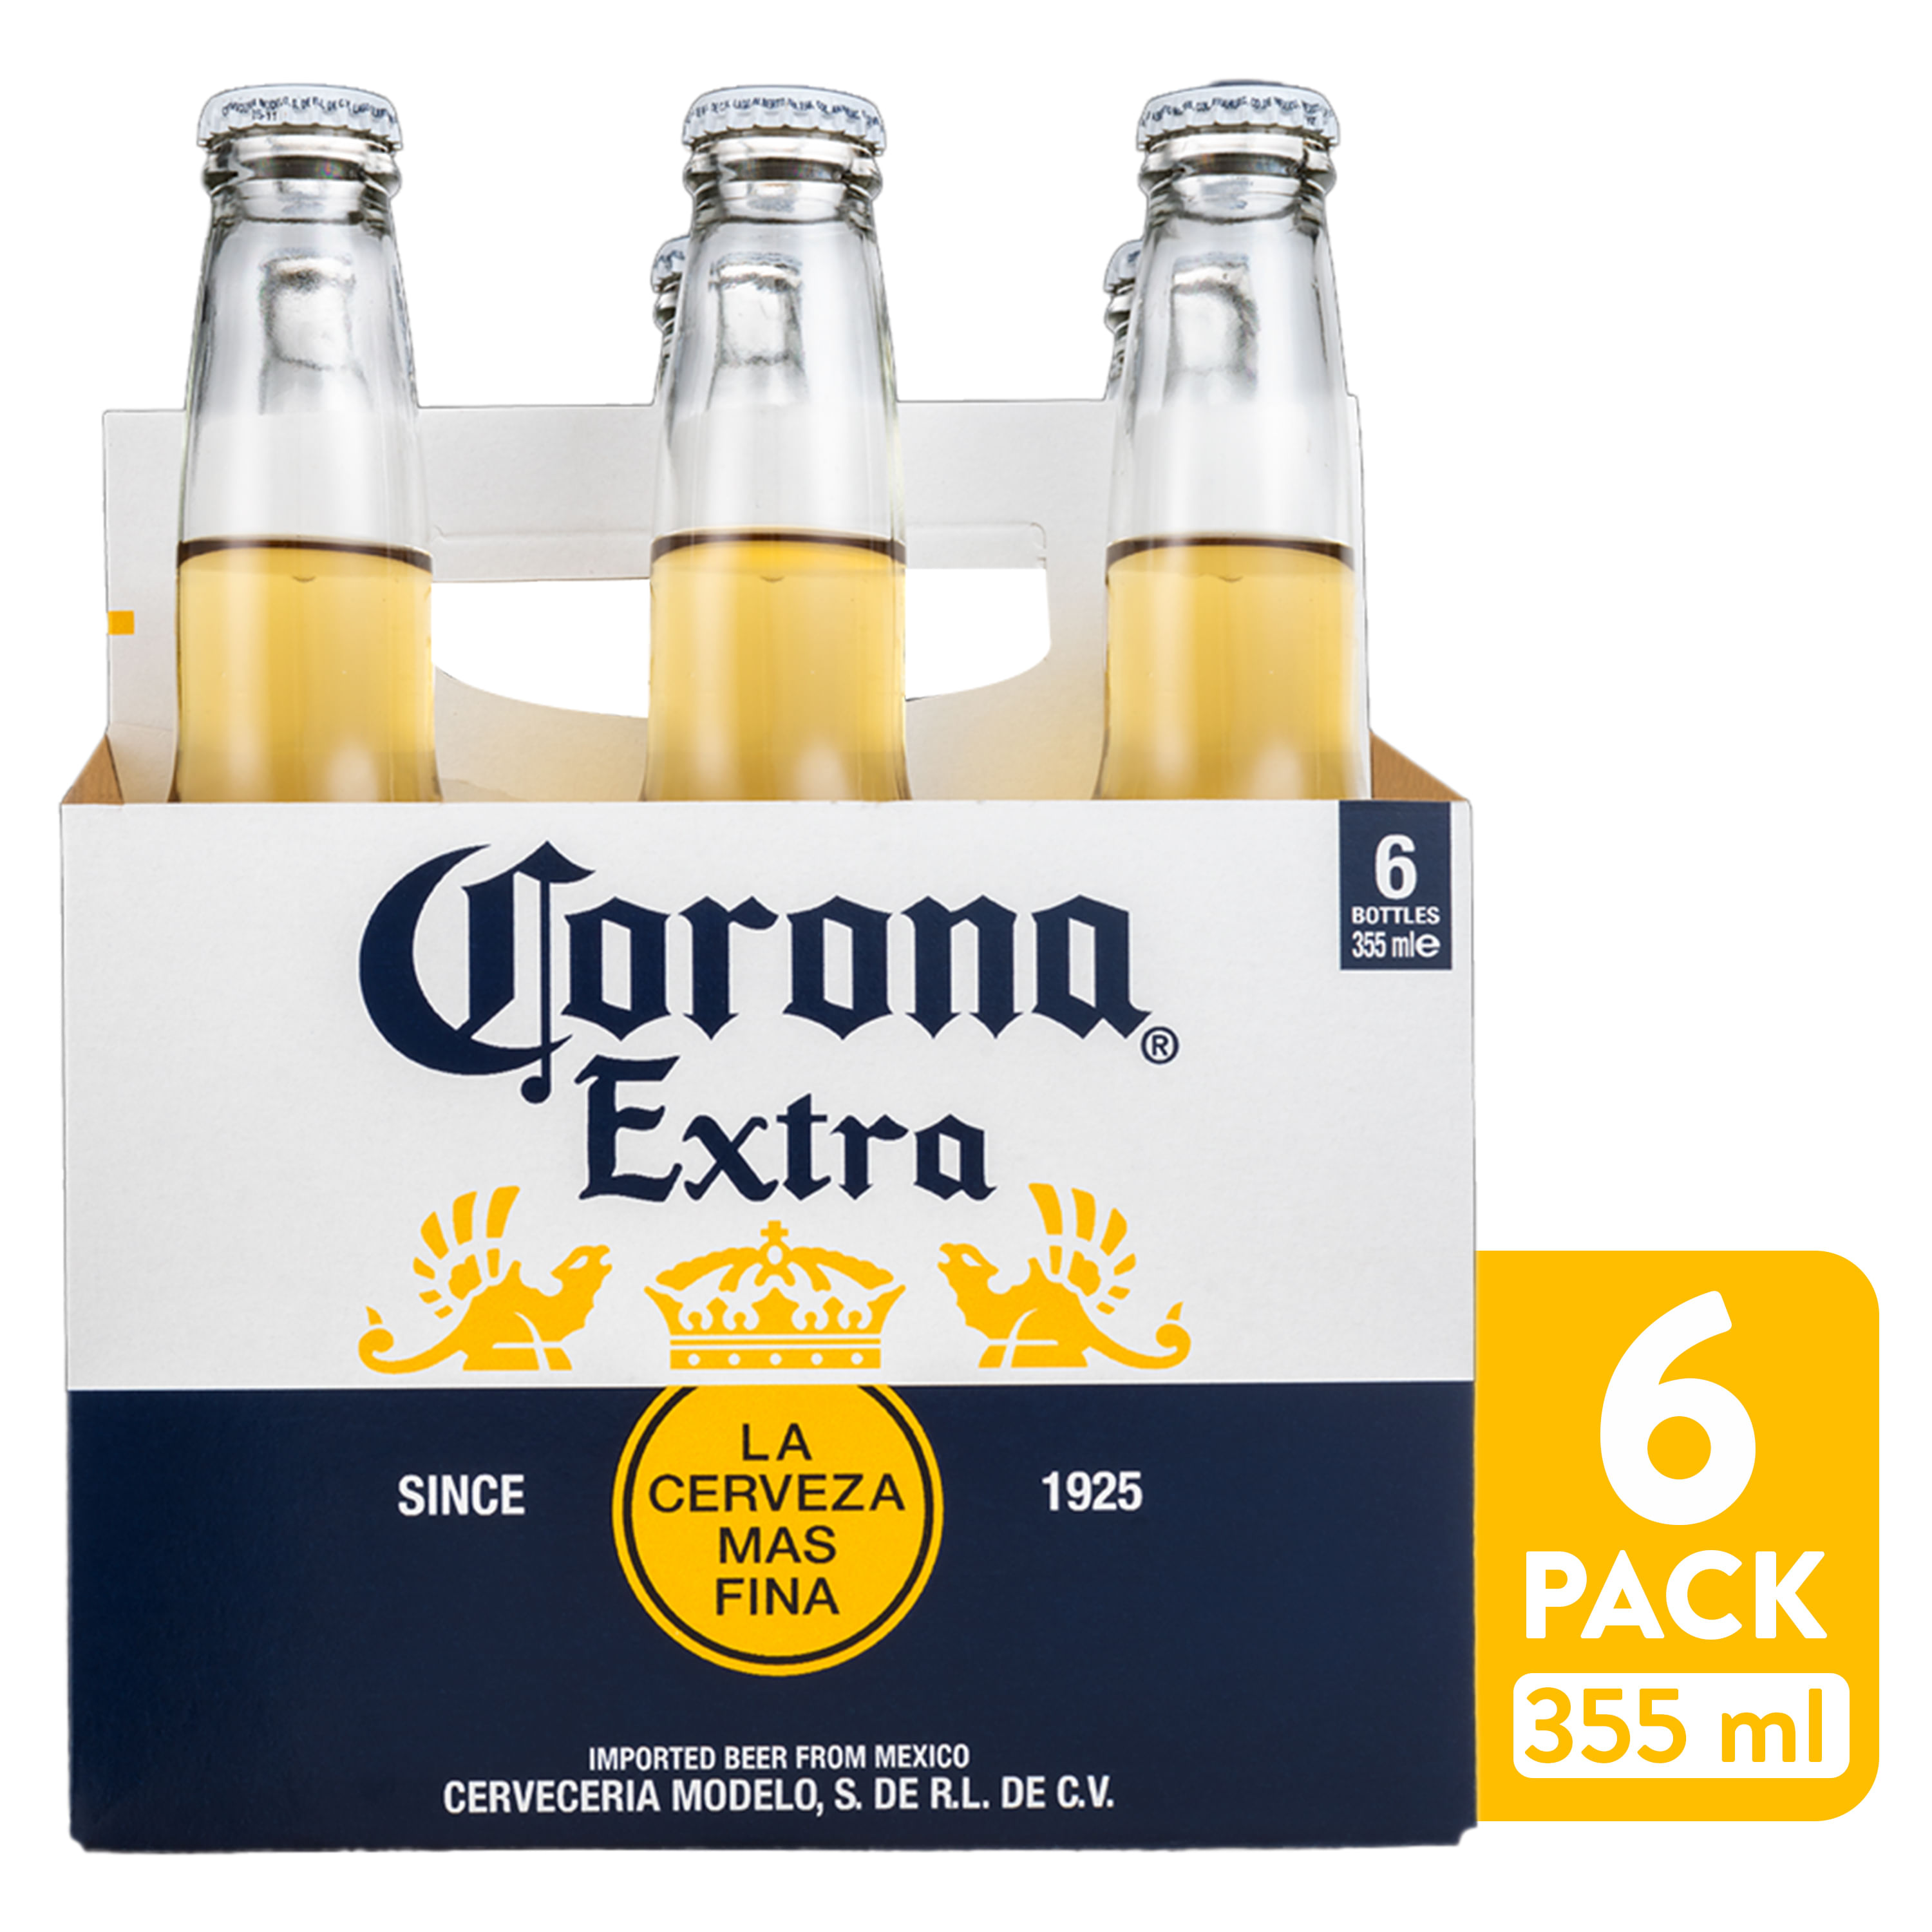 Cerveza-Corona-24-Pack-8520ml-1-34202